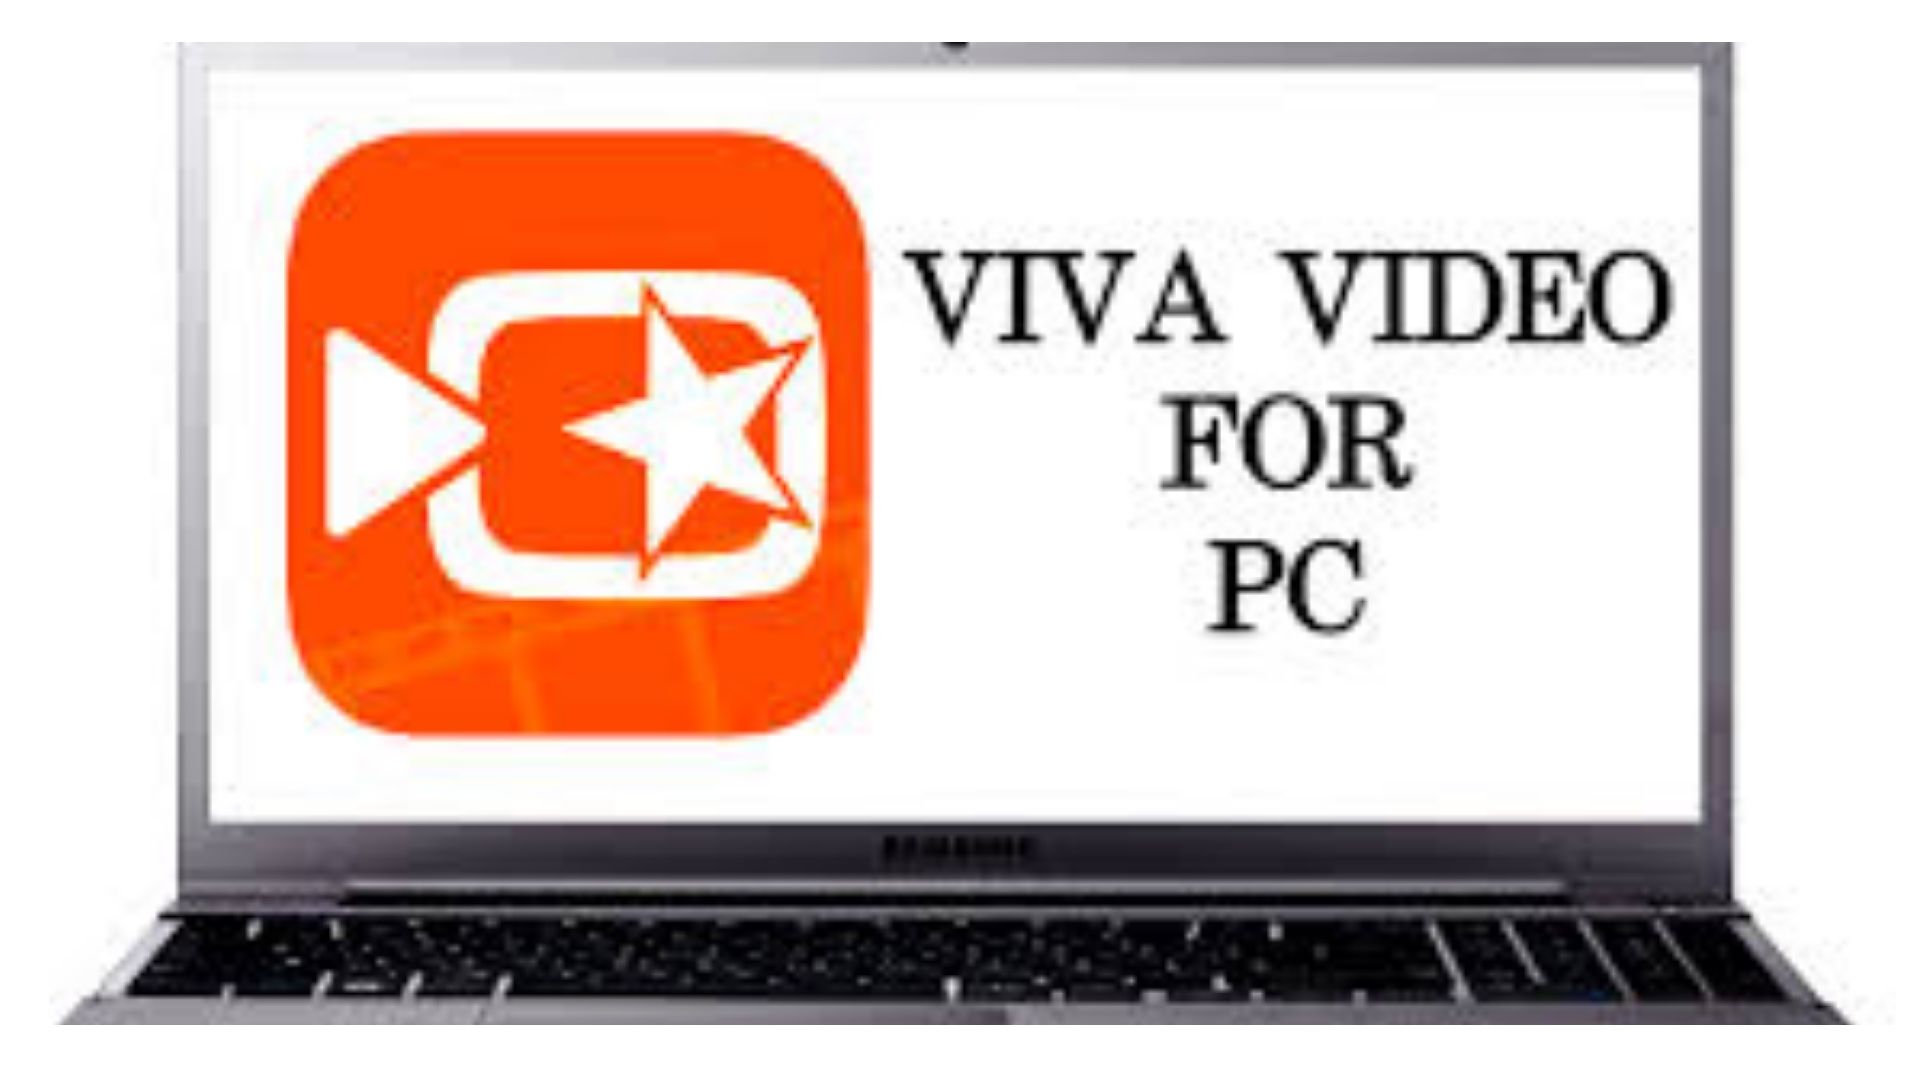 Vivavideo for PC